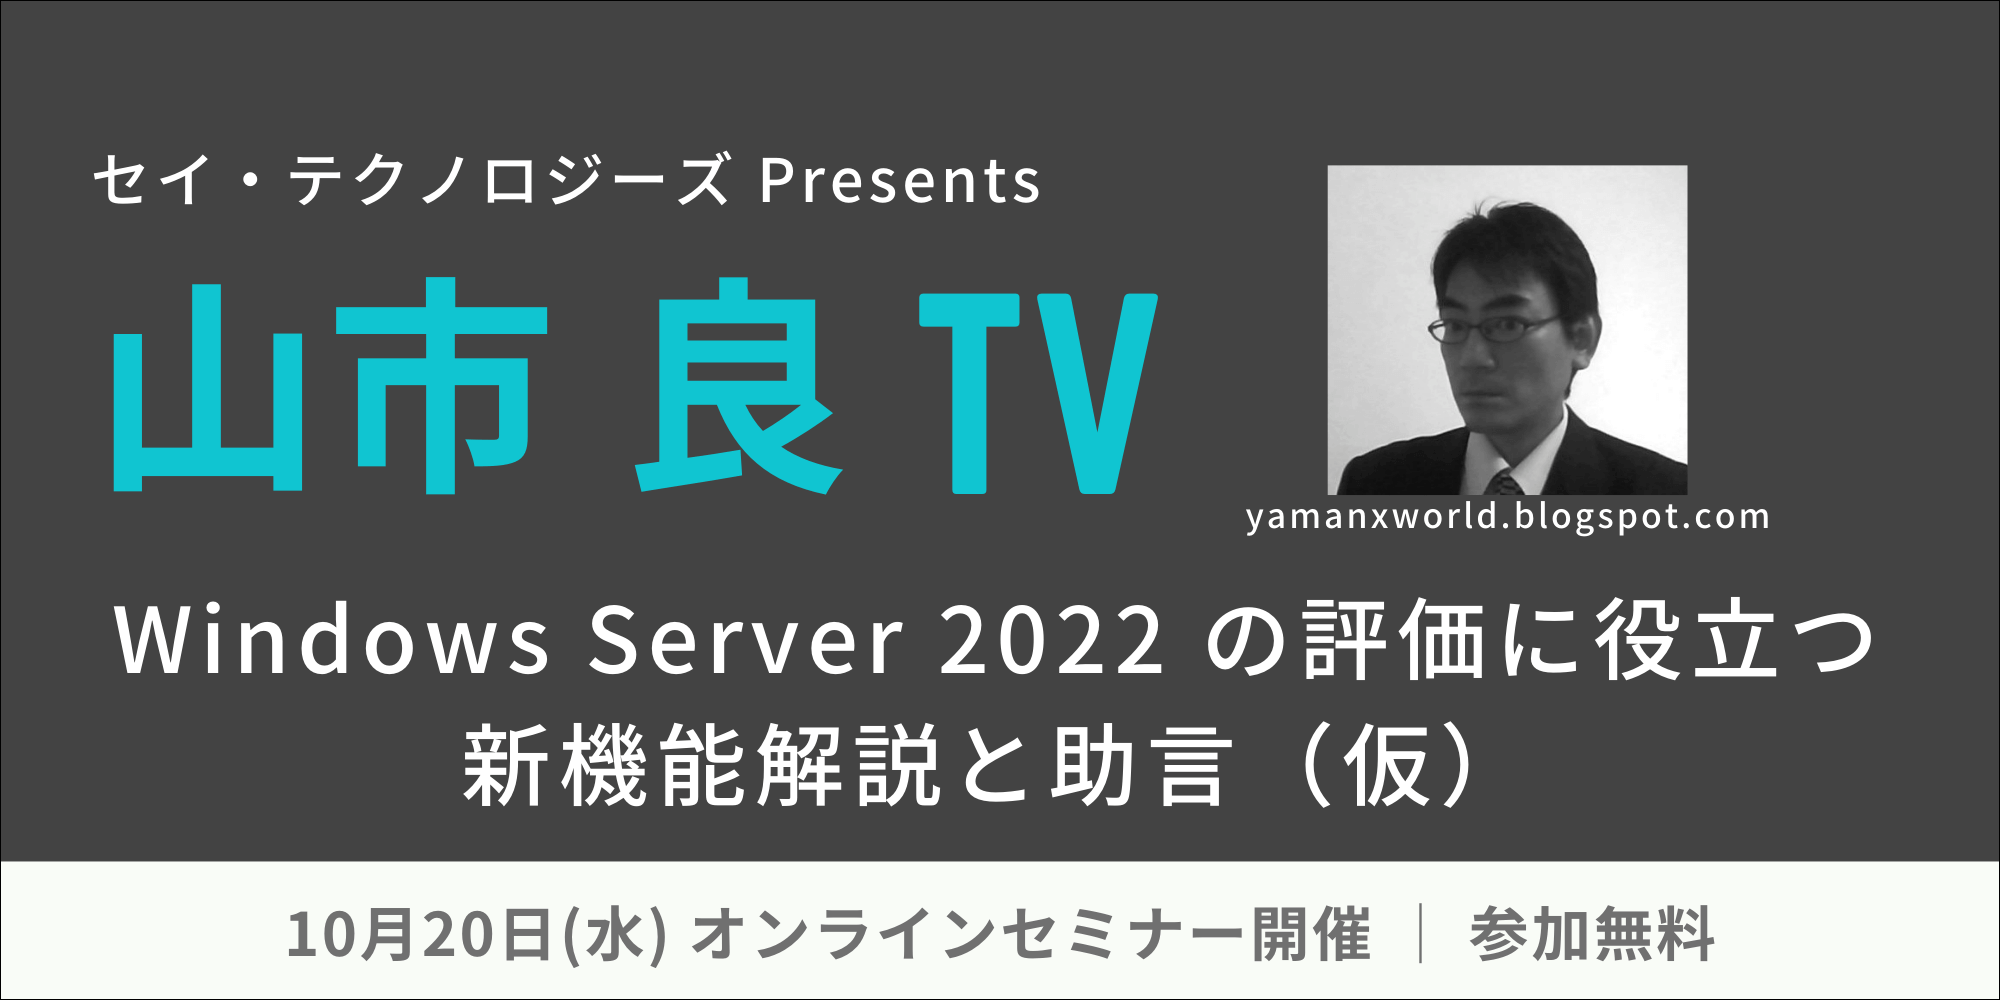 Microsoft MVP 山市 良氏による Windows Server 2022 解説セミナーを